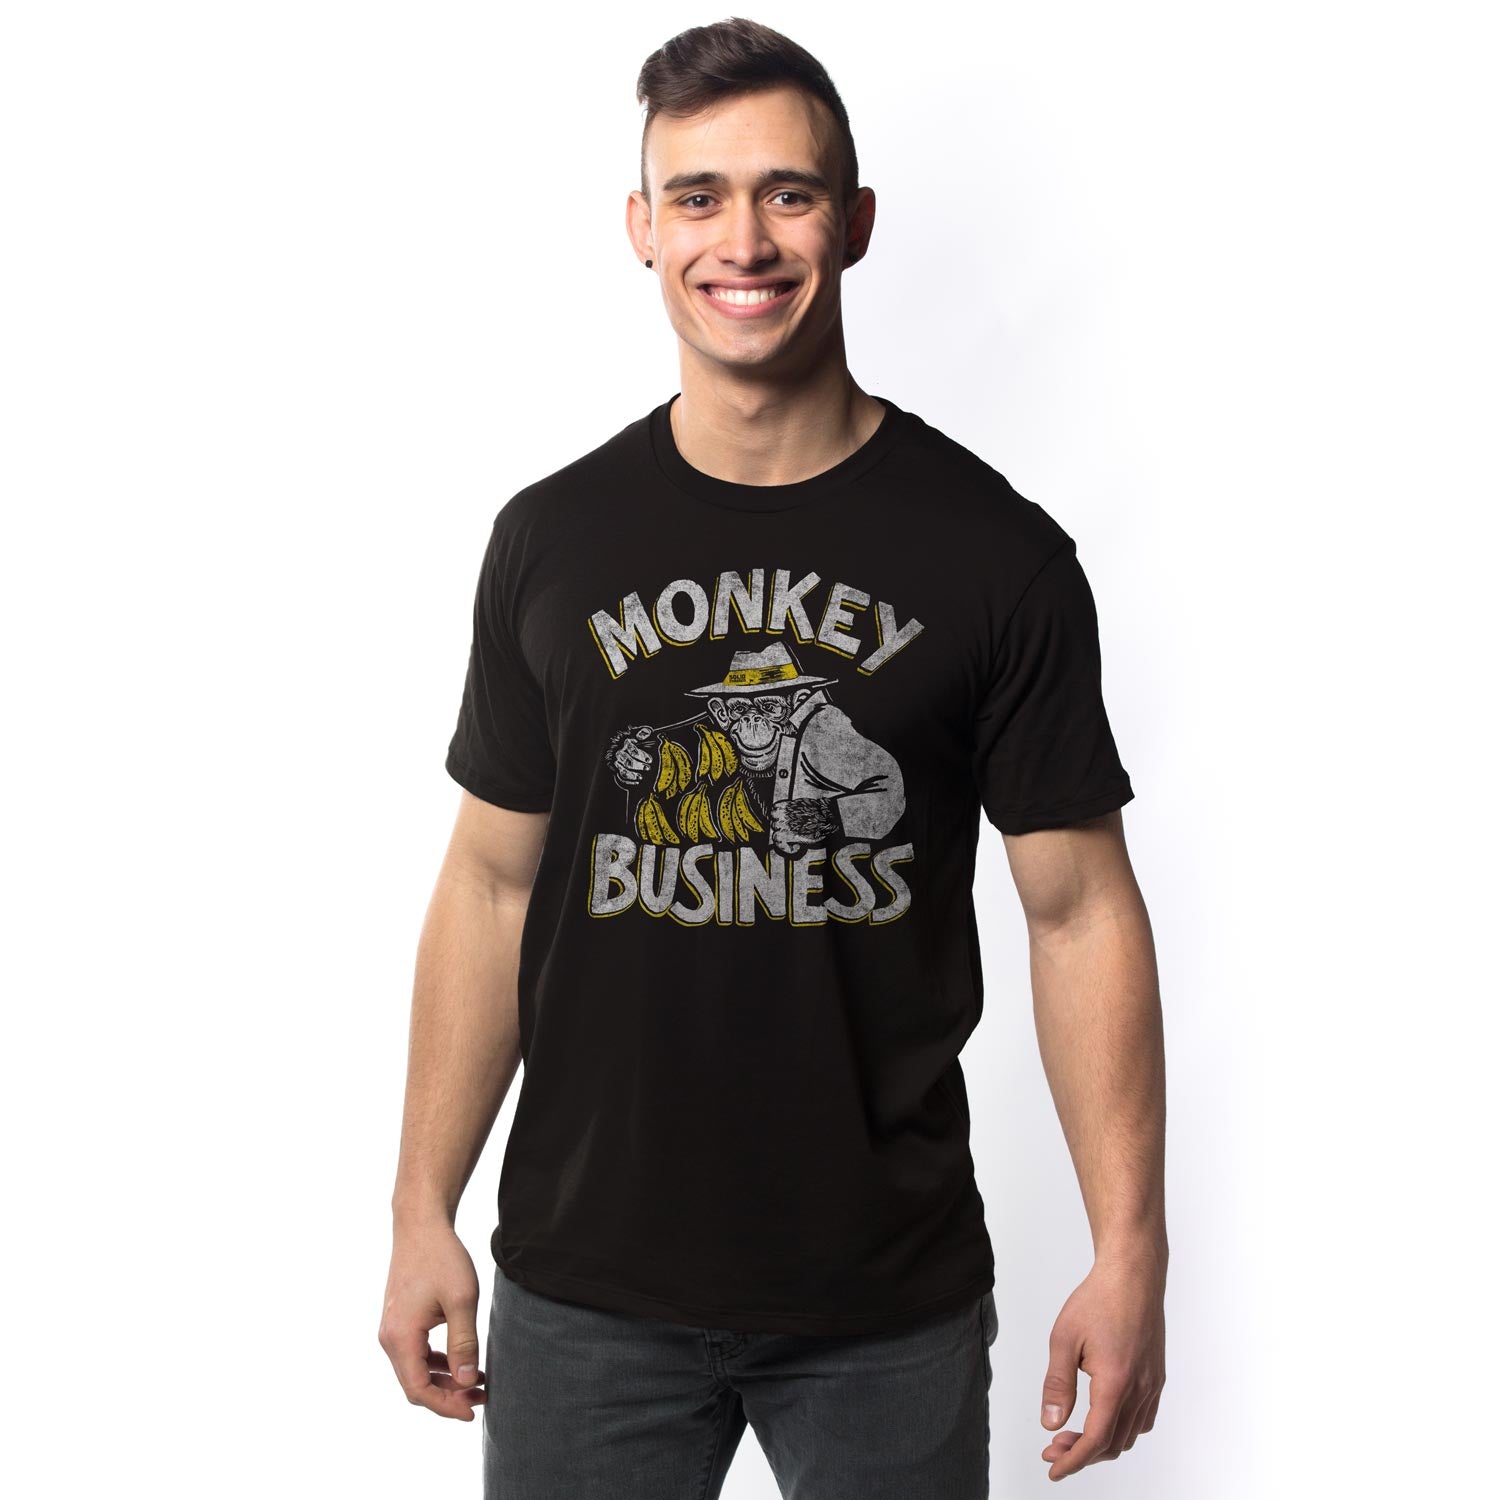 Humor Men's & Big Men's White Tiger Print Graphic T-Shirt, Sizes S-3XL